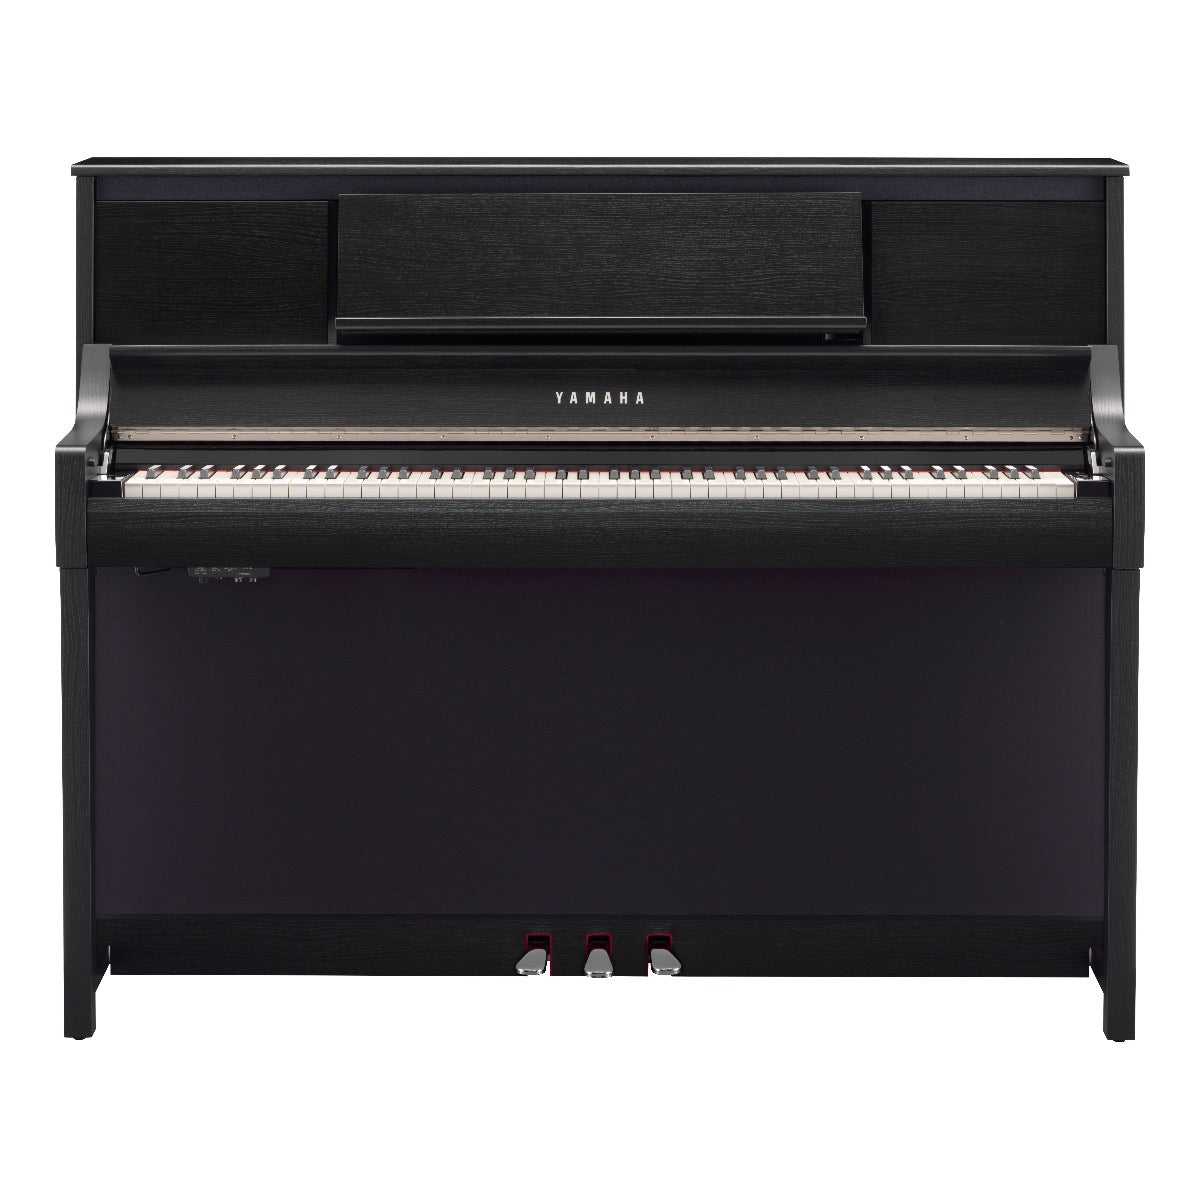 Yamaha Clavinova CSP295B Digital Piano with Bench - Black Walnut, View 2